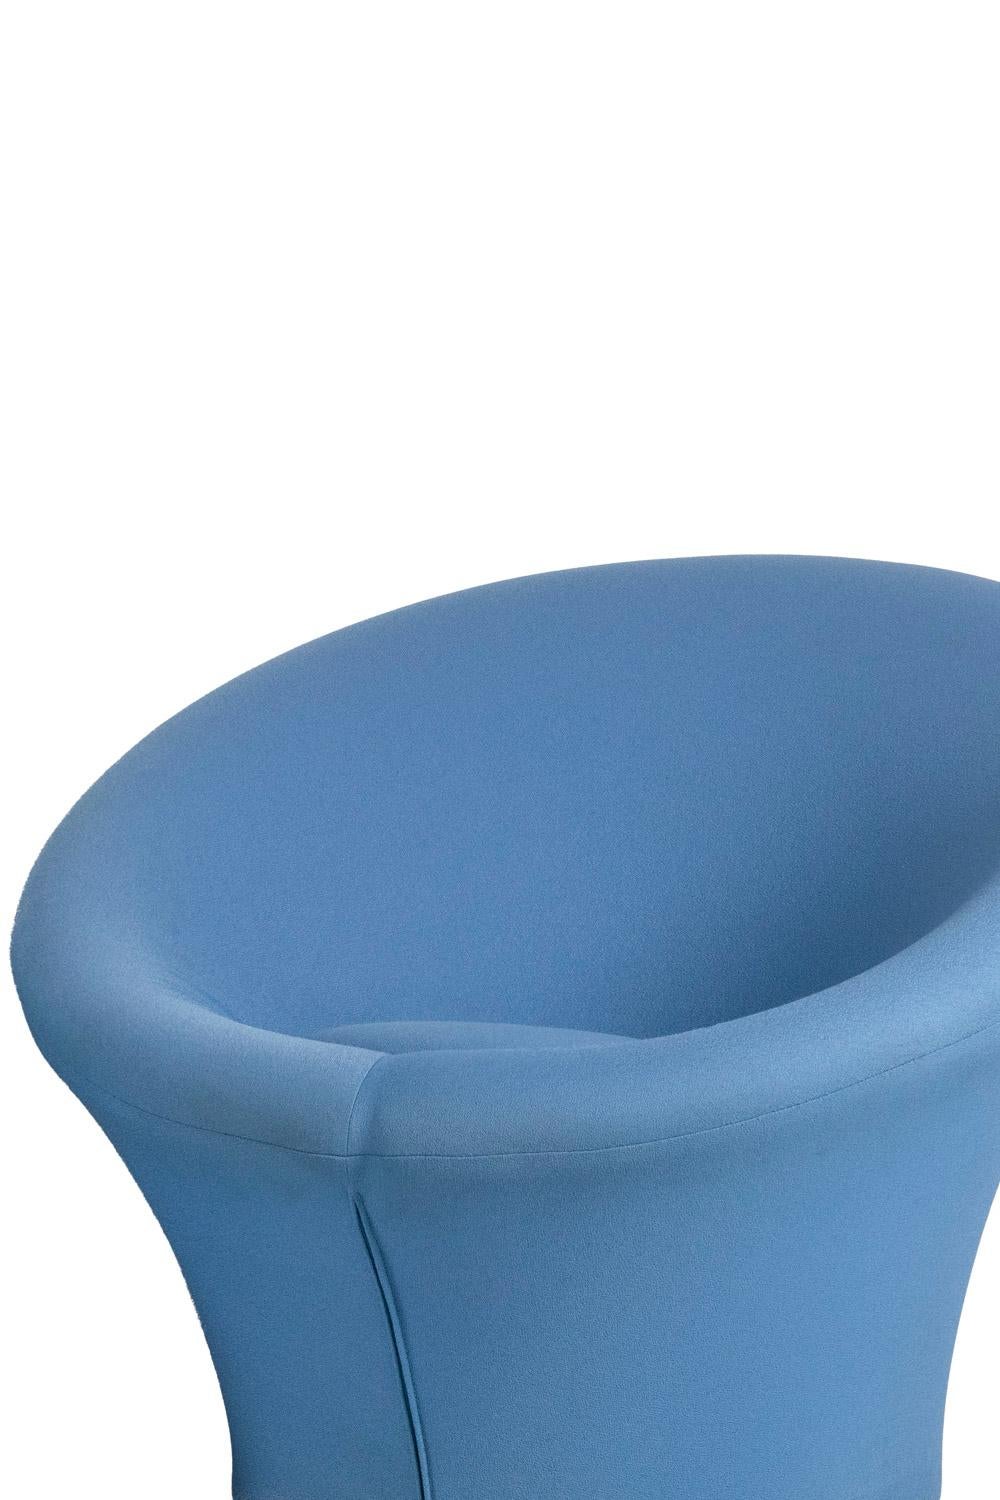 Pierre Paulin for Artifort, signed.

Pair of “Mushroom” model armchairs, blue in color.